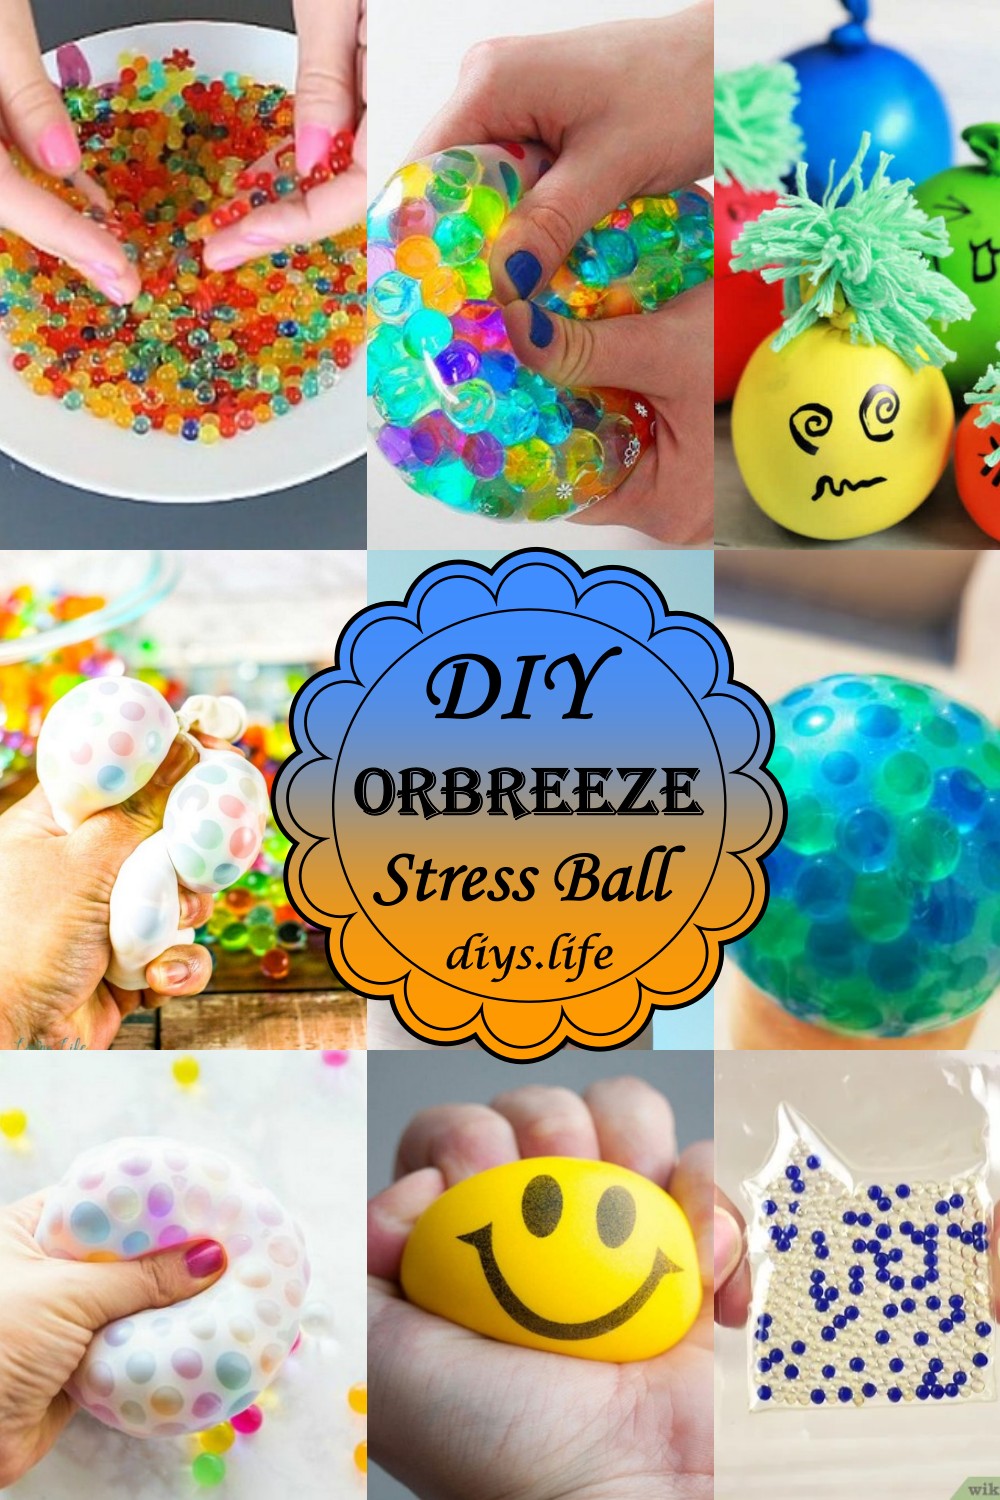 DIY Orbreeze Stress Ball